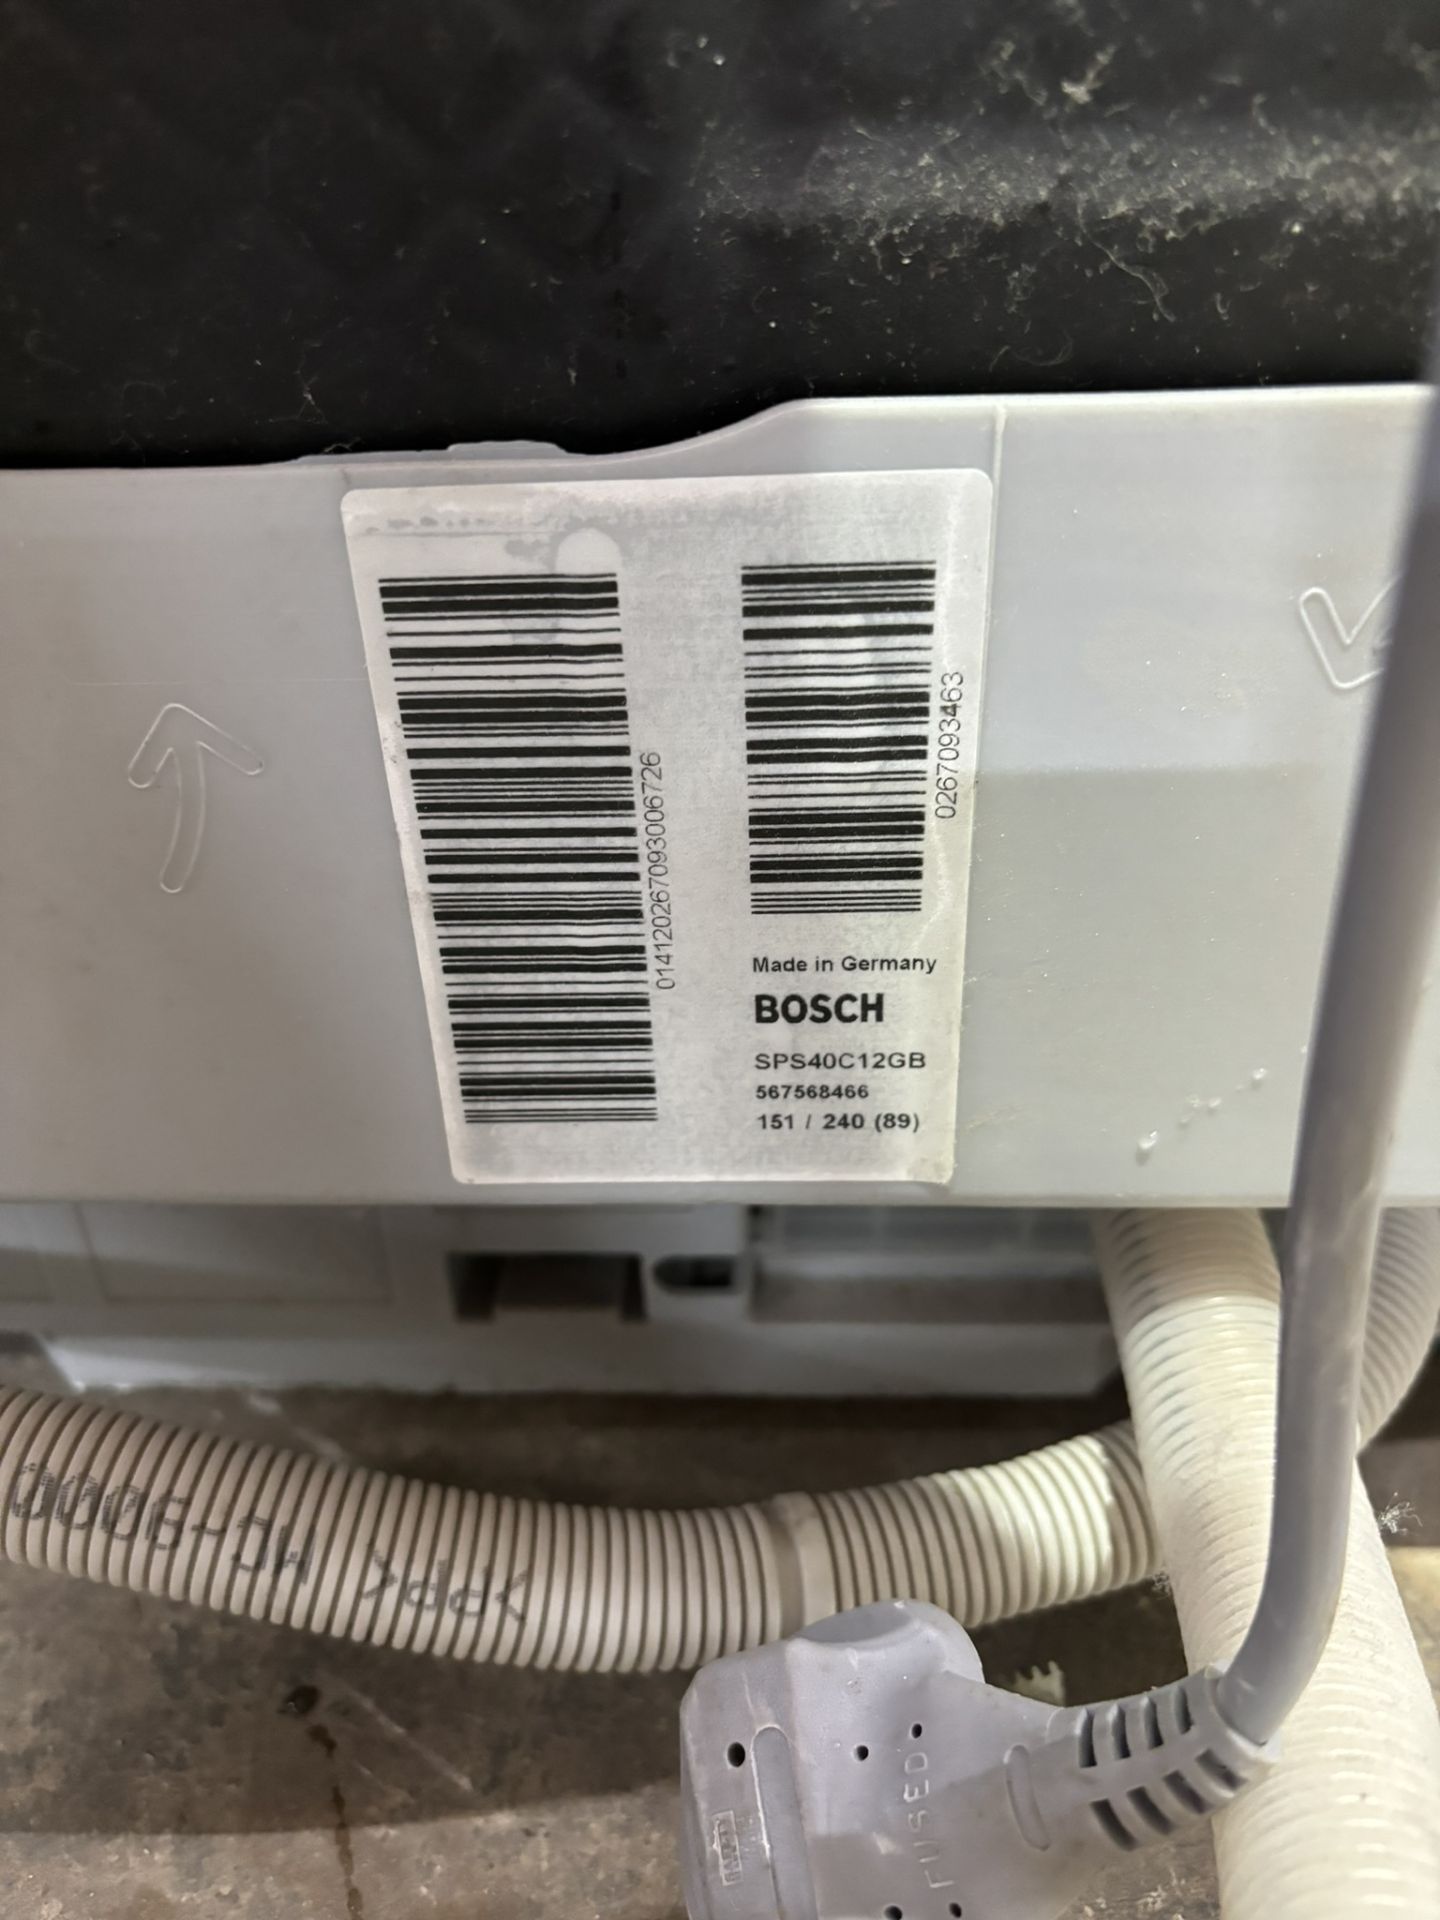 Bosch SPS40C12GB Classixx 9 Place Slimline Freestanding Dishwasher White - Image 7 of 7